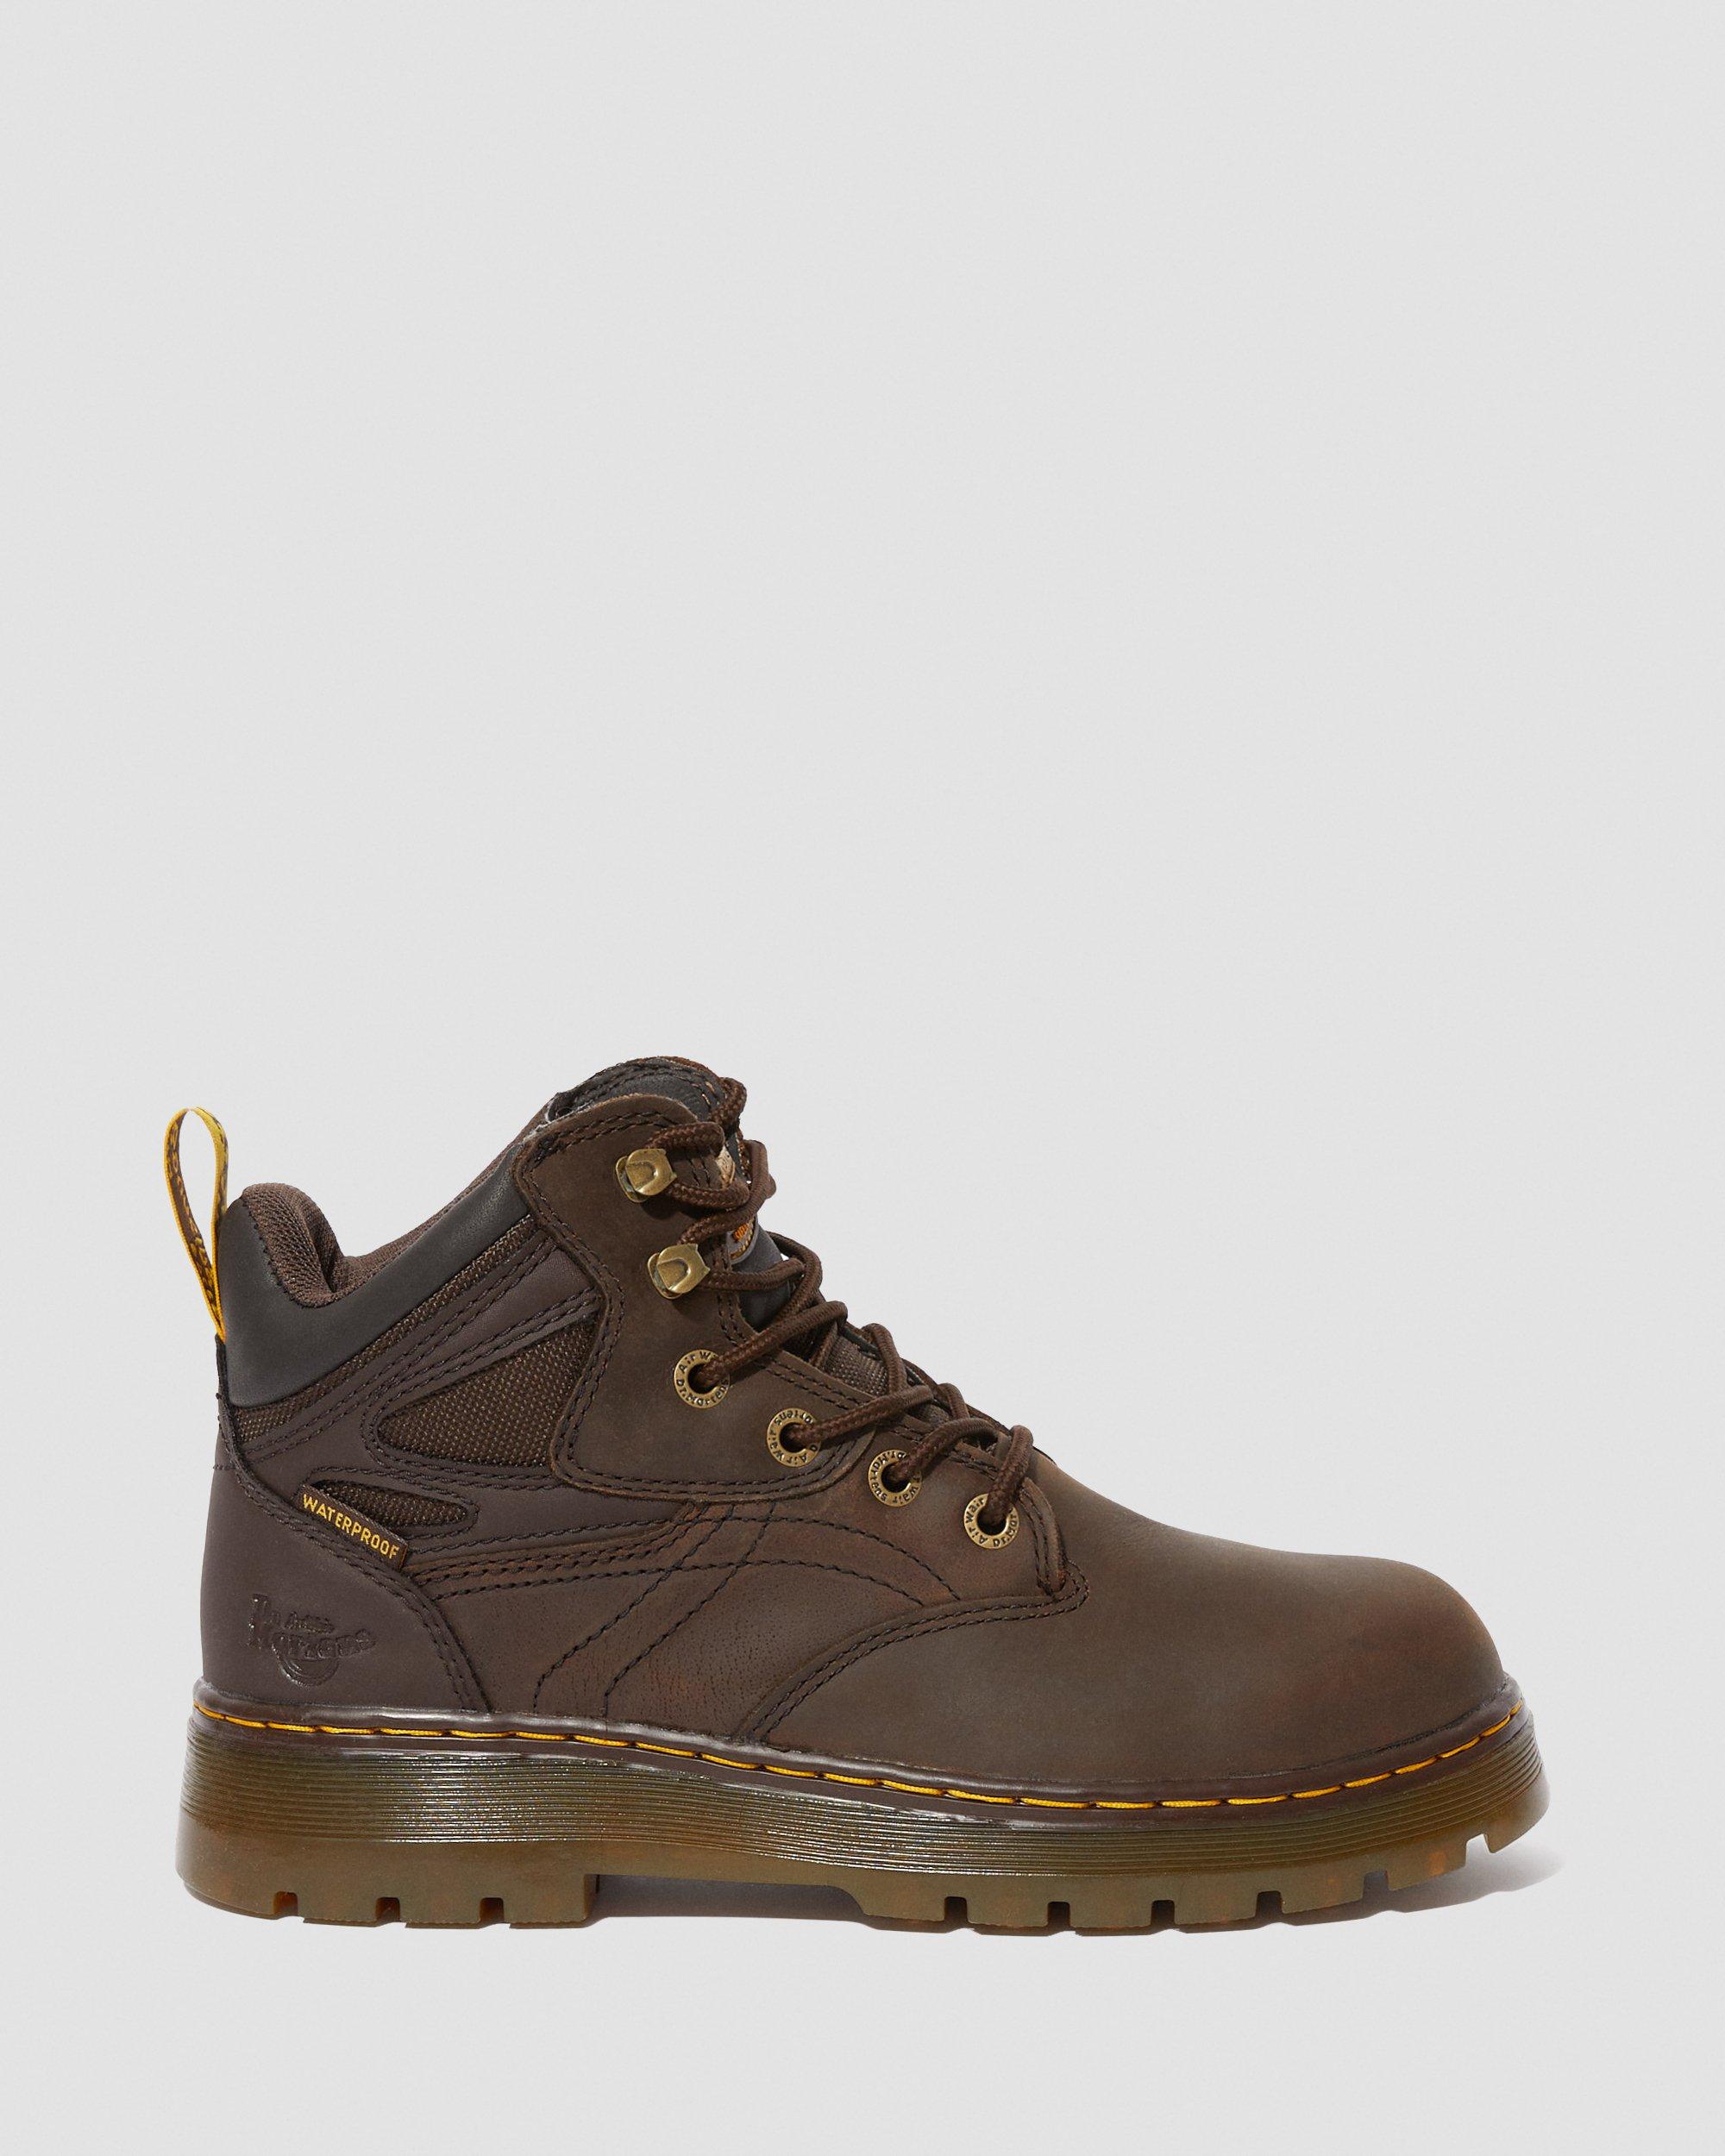 Plenum Waterproof Steel Toe Work Boots in Dark Brown | Dr. Martens